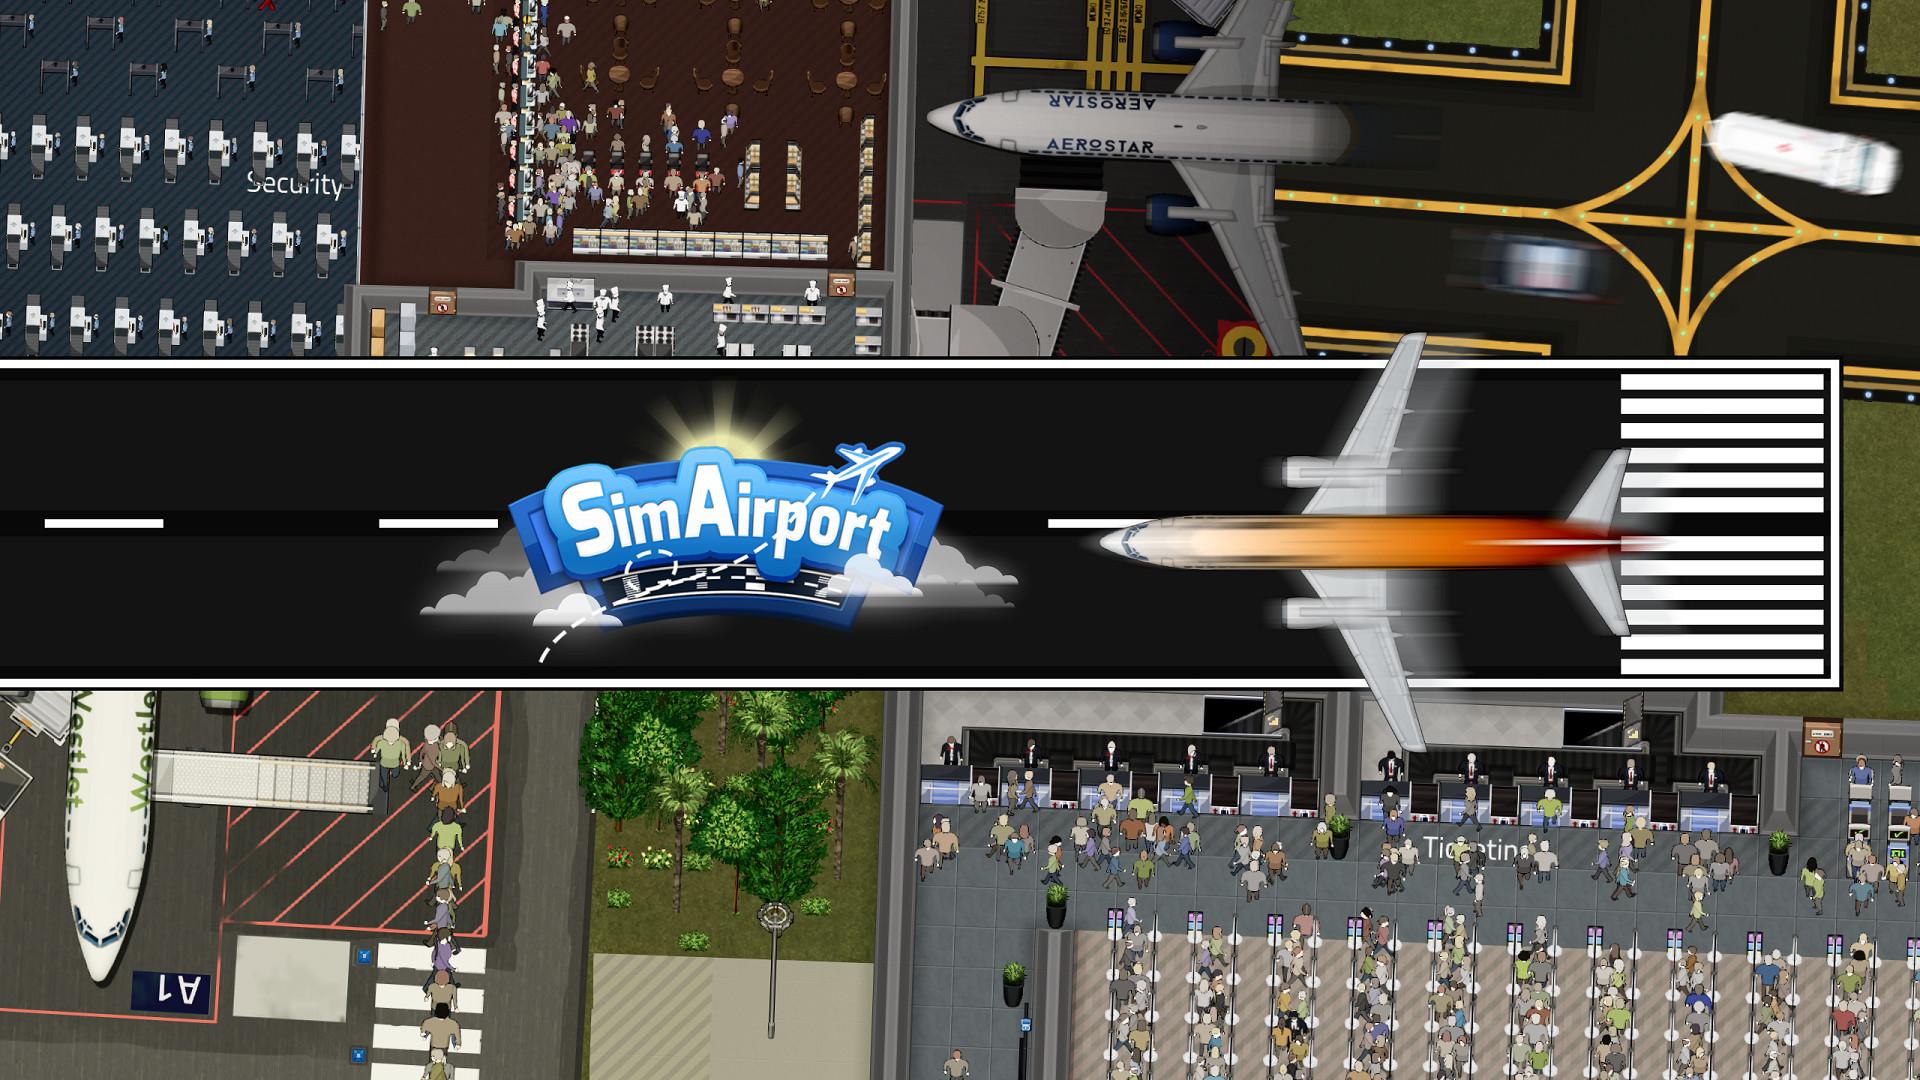 Screenshot №1 from game SimAirport